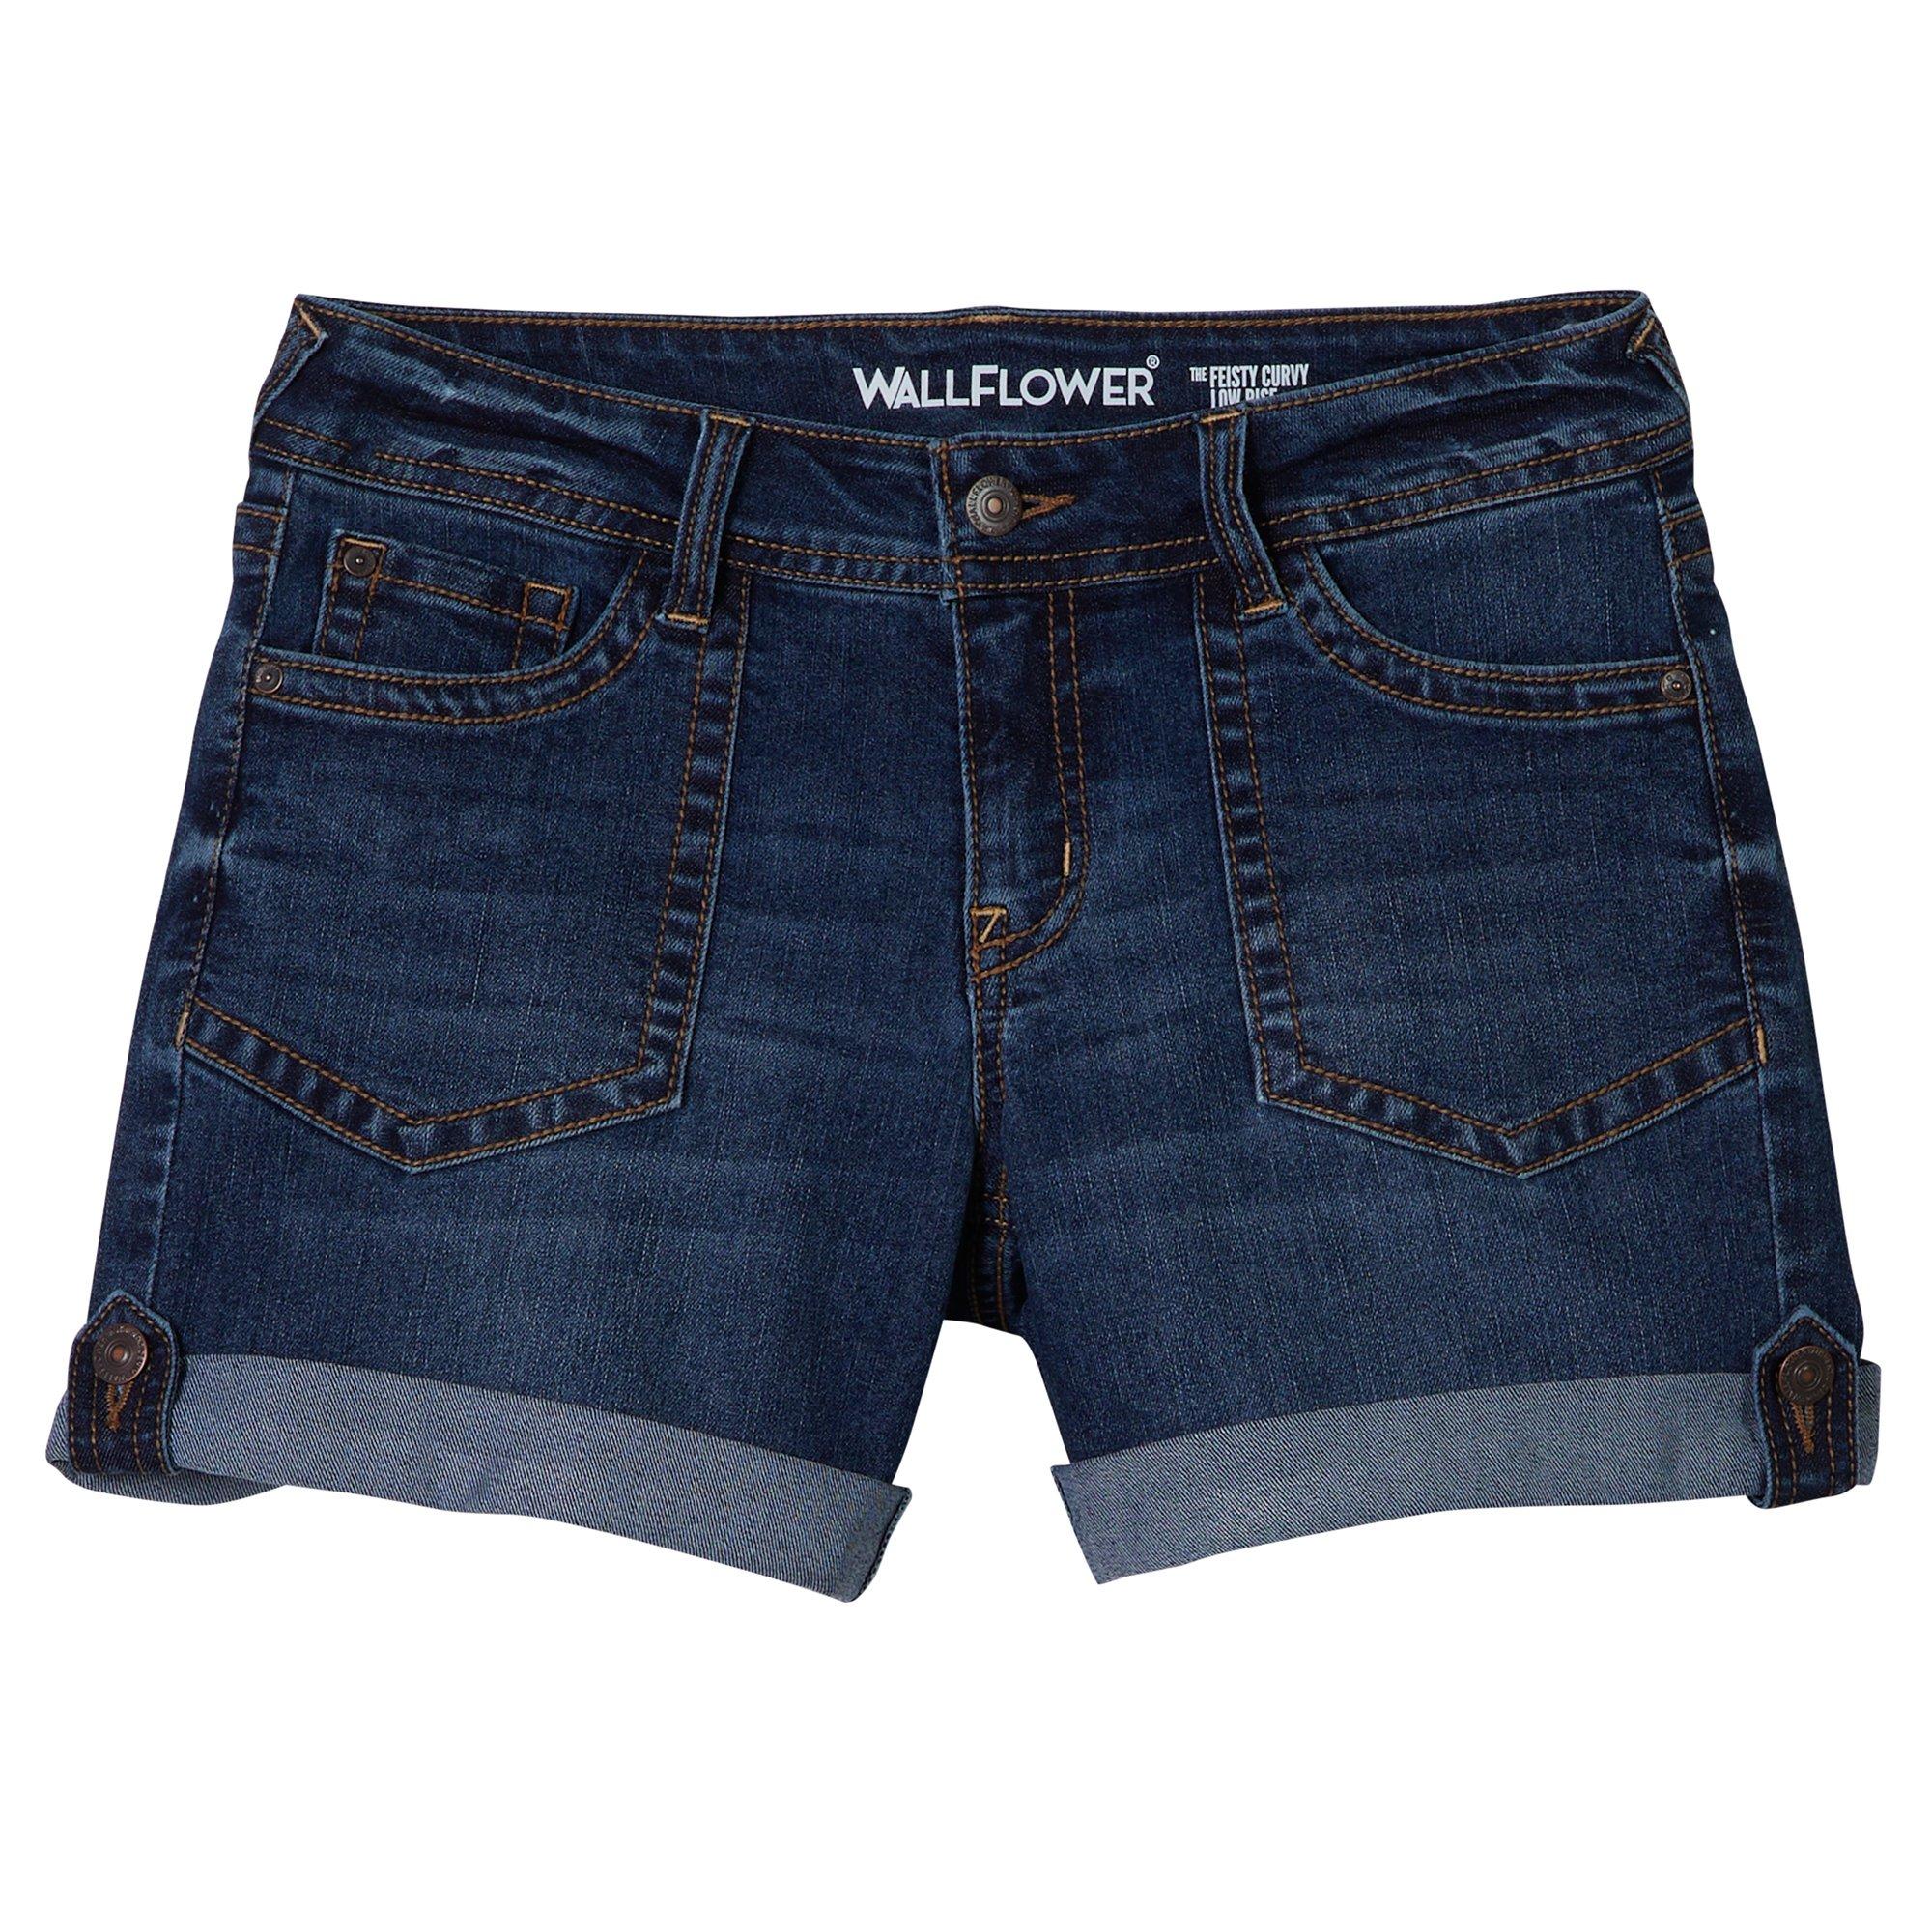 Wallflower Juniors Fiesty Curvy Low Rise Denim Shorts